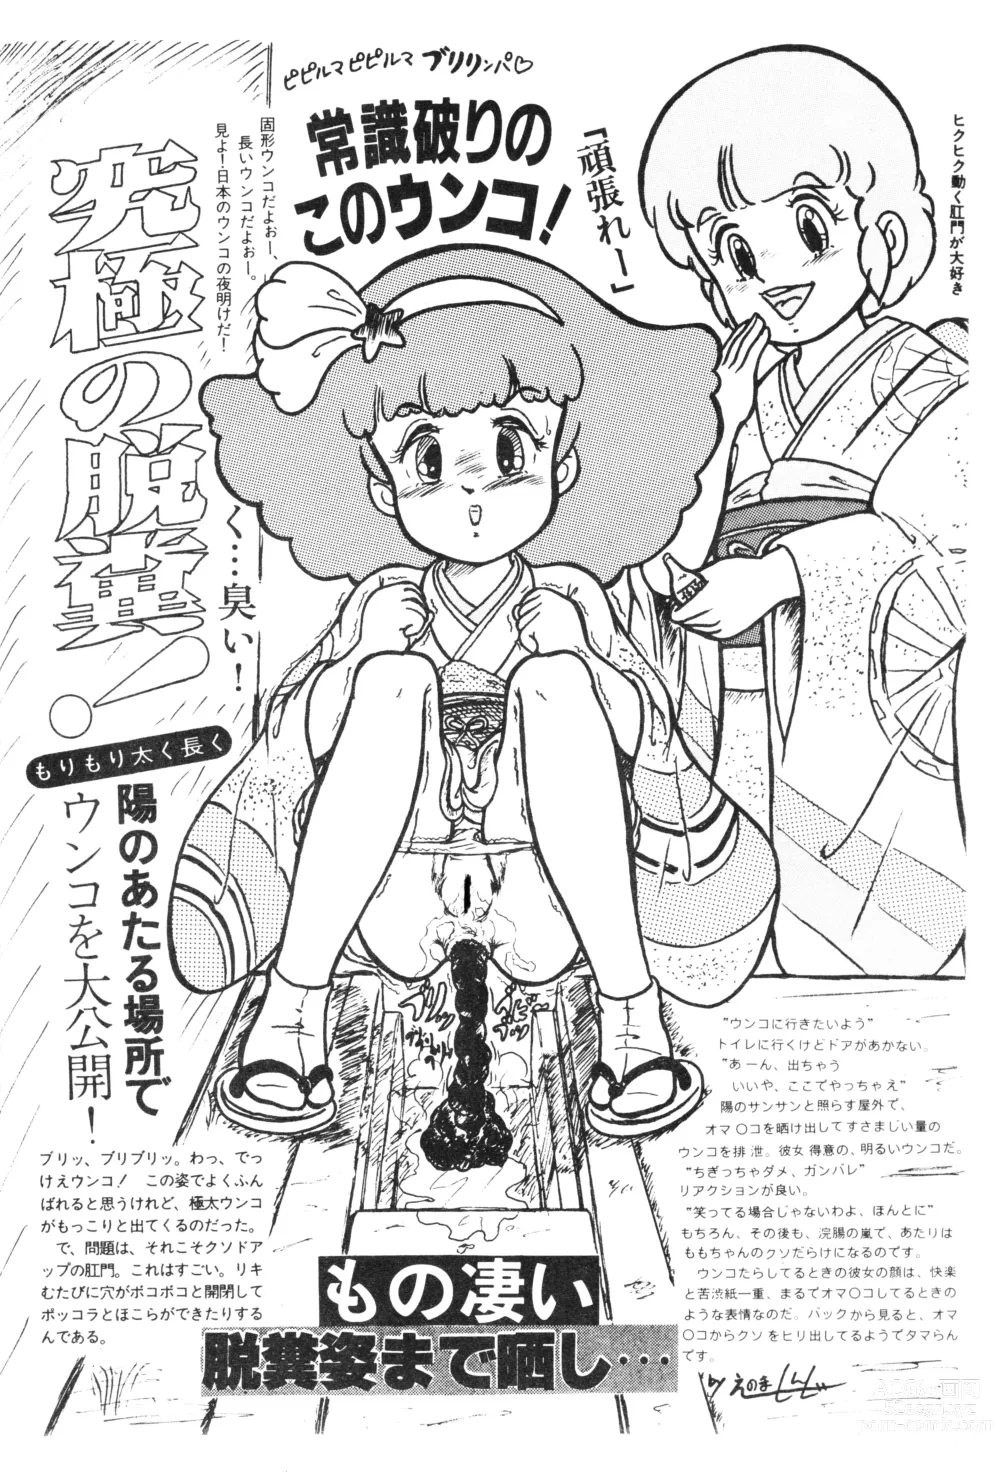 Page 7 of doujinshi Momo